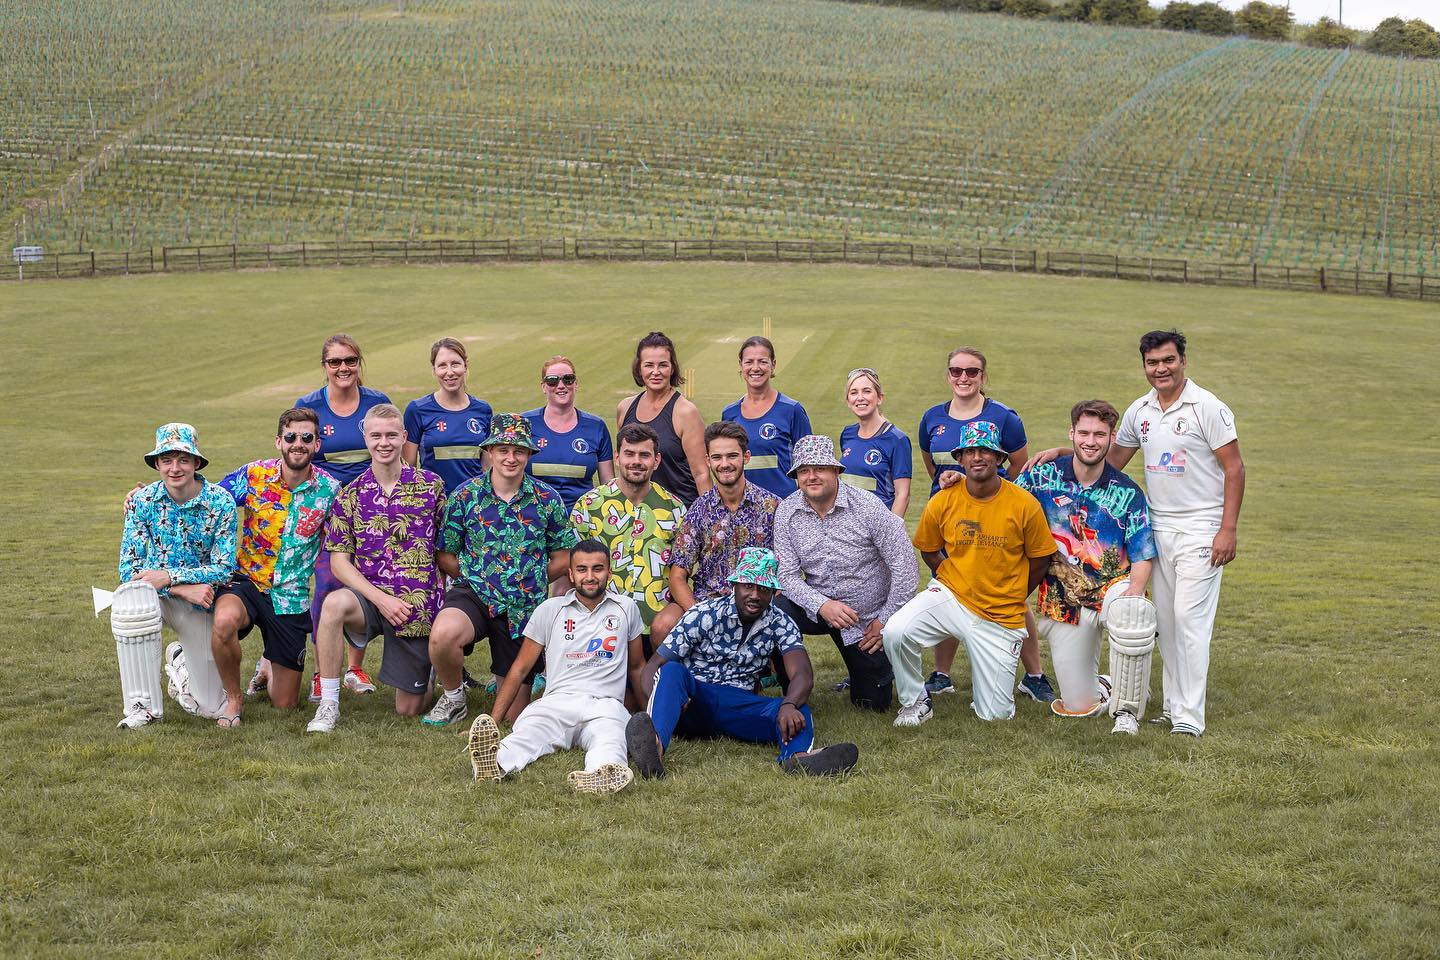 People of Cowdrey Cricket Club